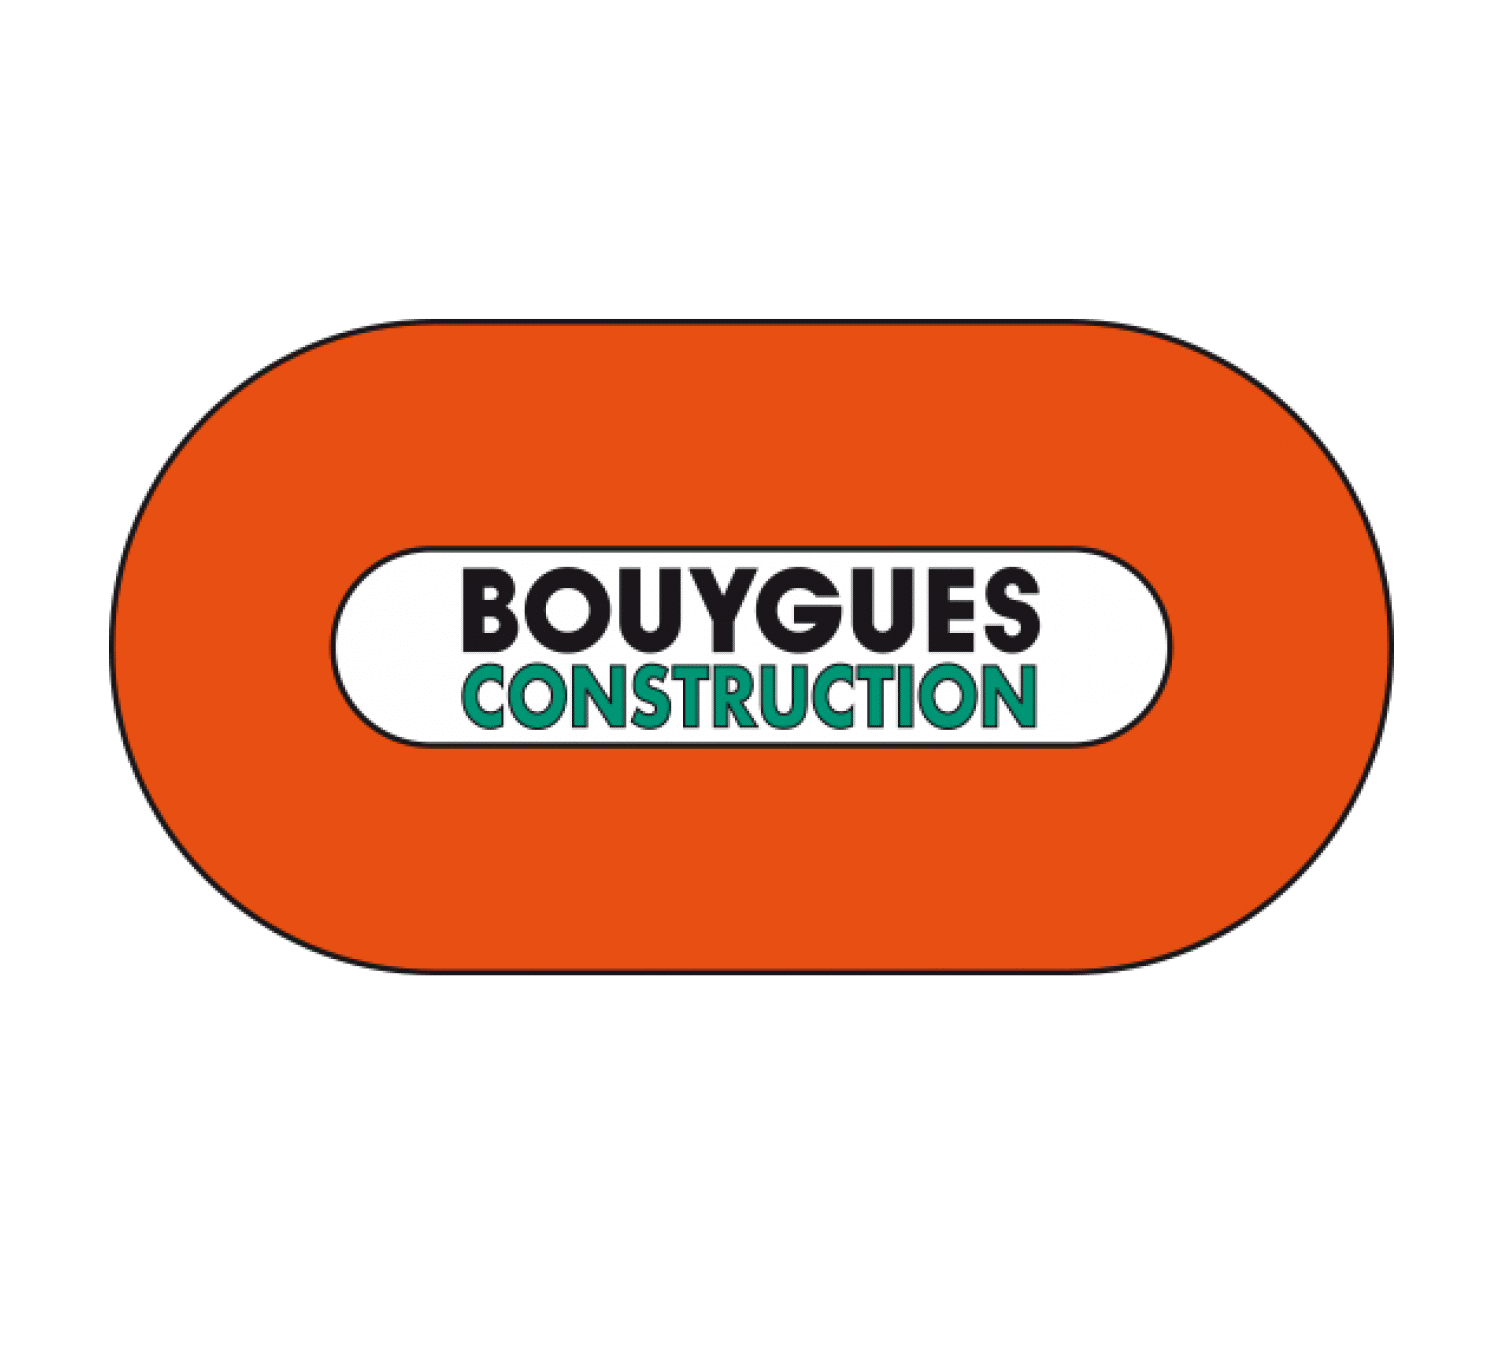 logo-Bouygues-construction